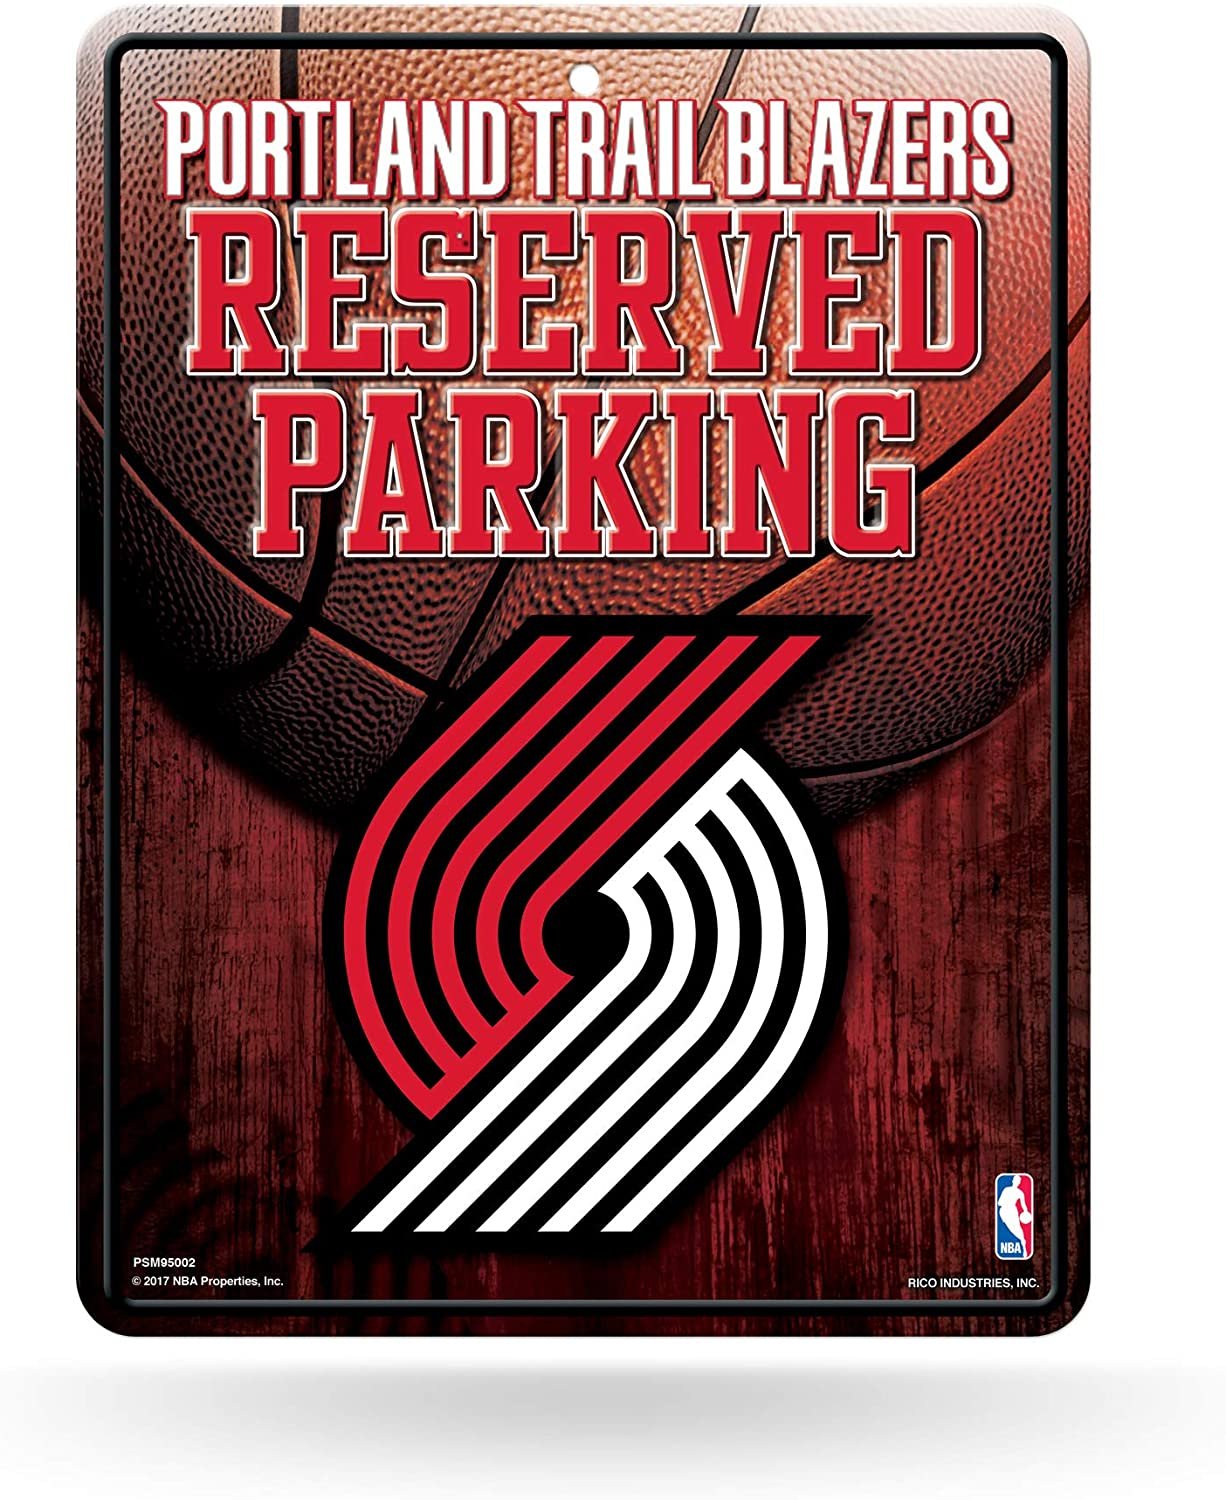 Portland Trail Blazers 8-inch by 11-inch Metal Parking Sign Décor